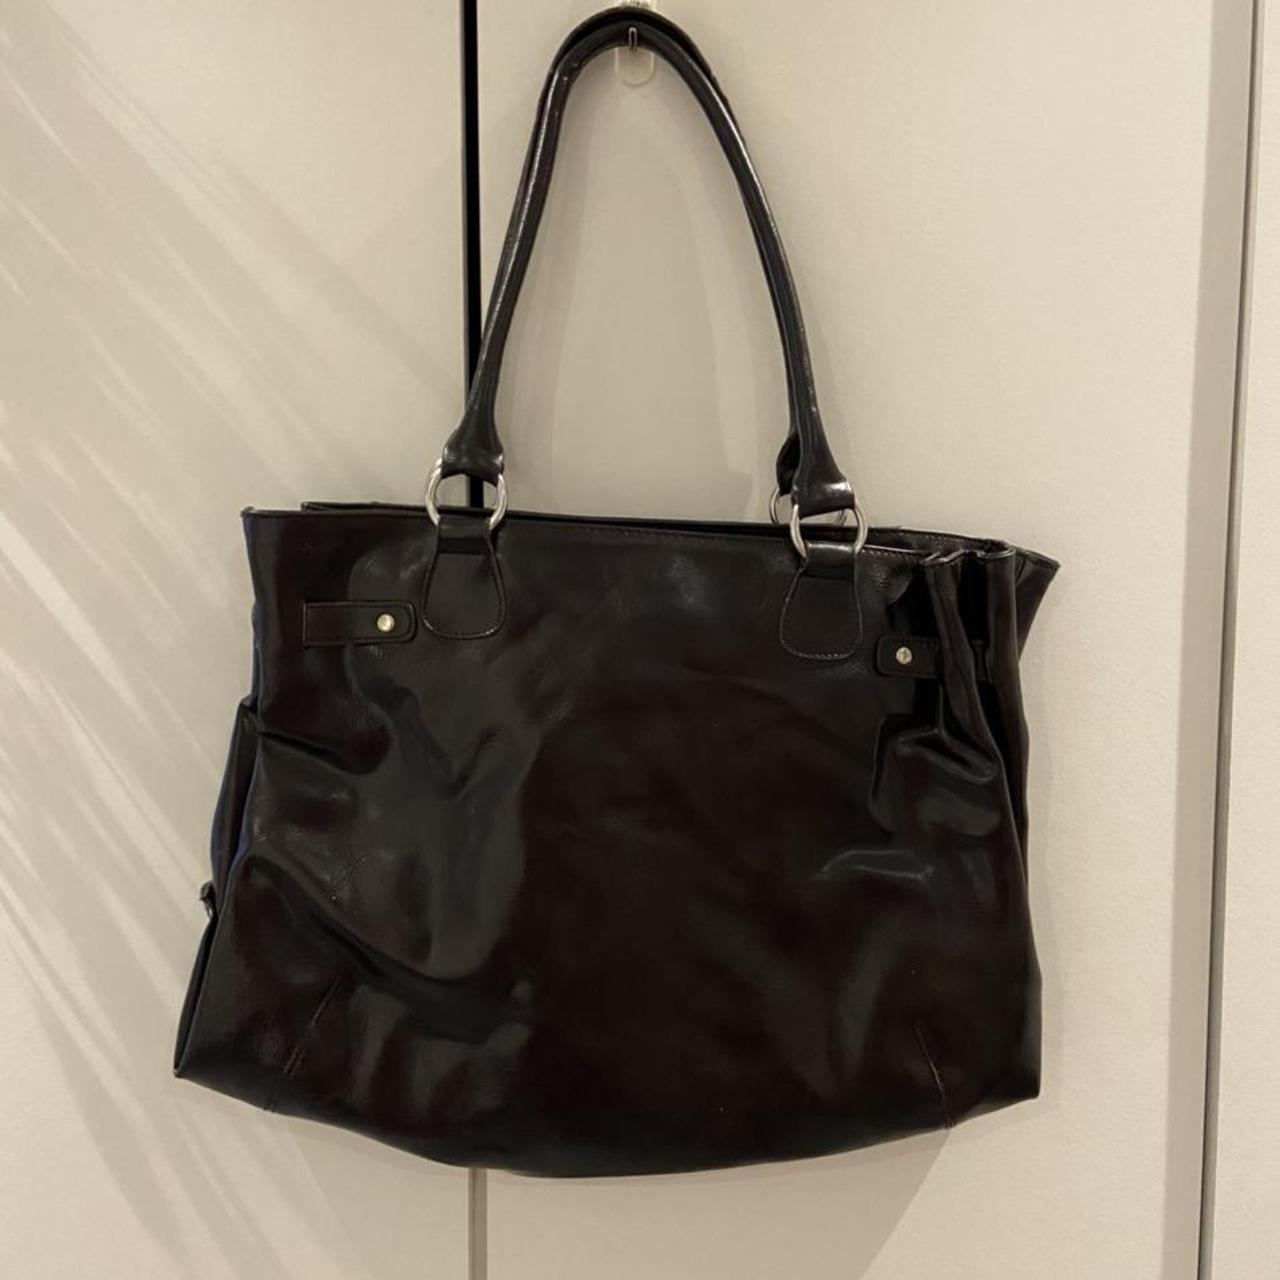 Product Image 2 - Dark brown Fiorelli bag. Great